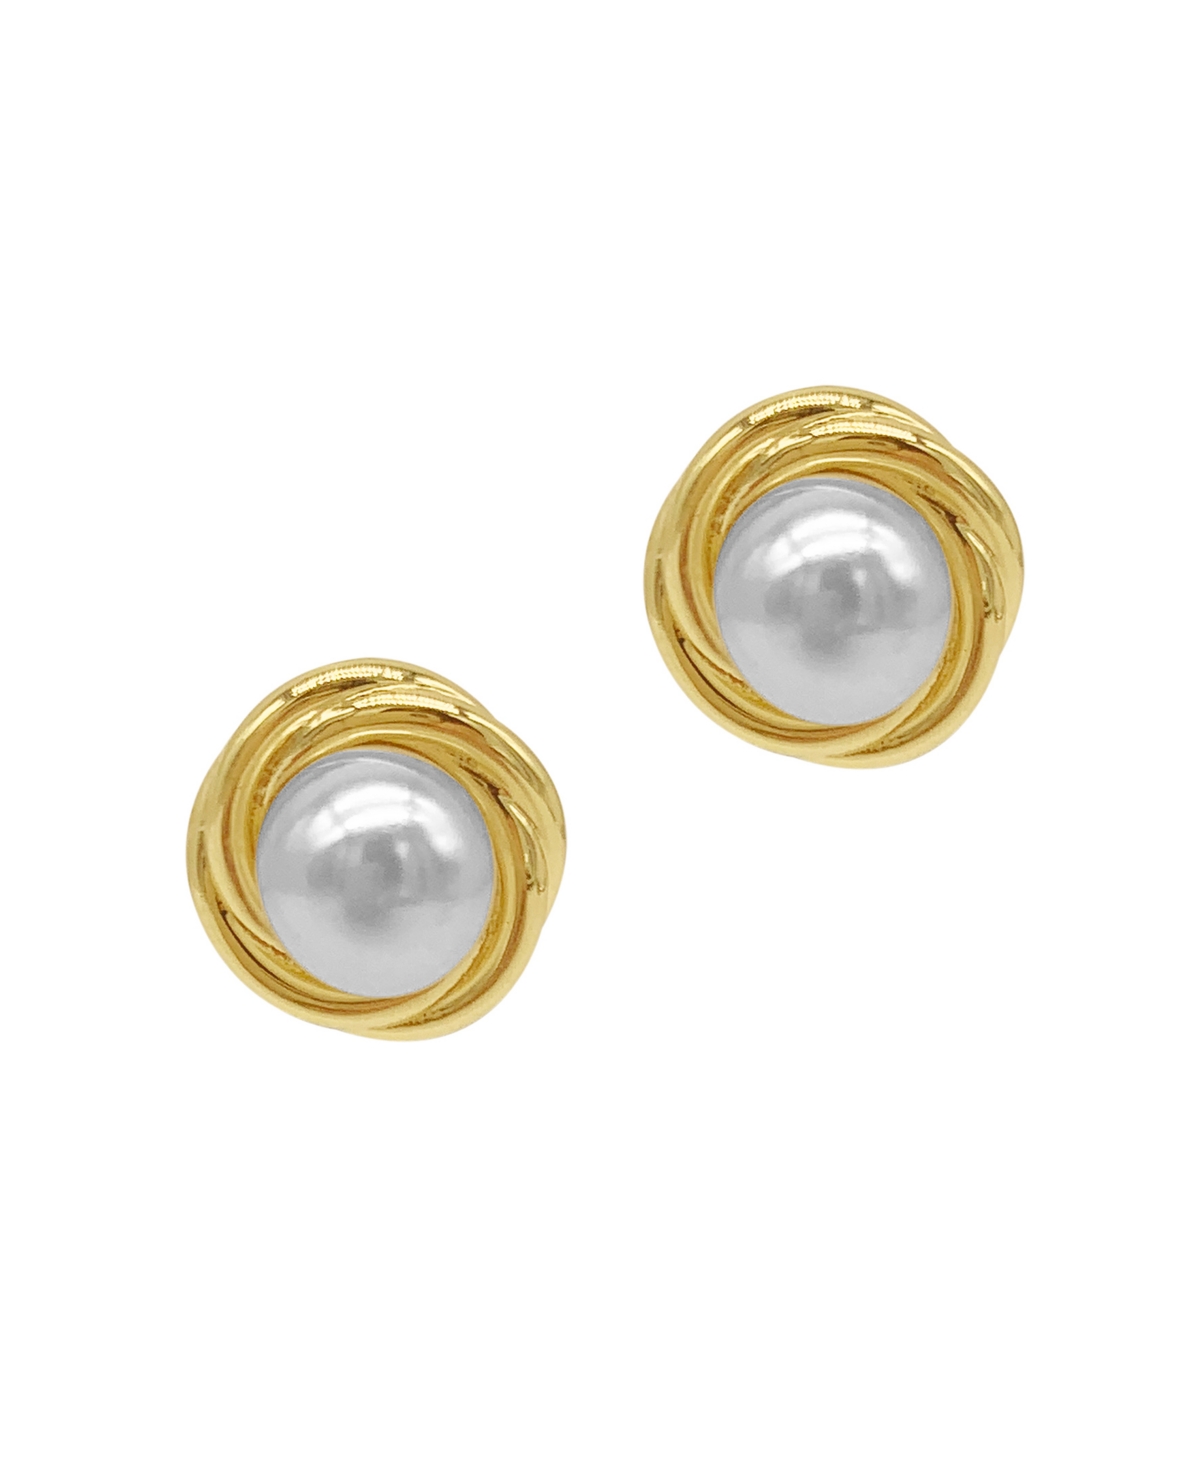 Imitation Pearl Framed Earrings - Yellow Gold-Tone, White